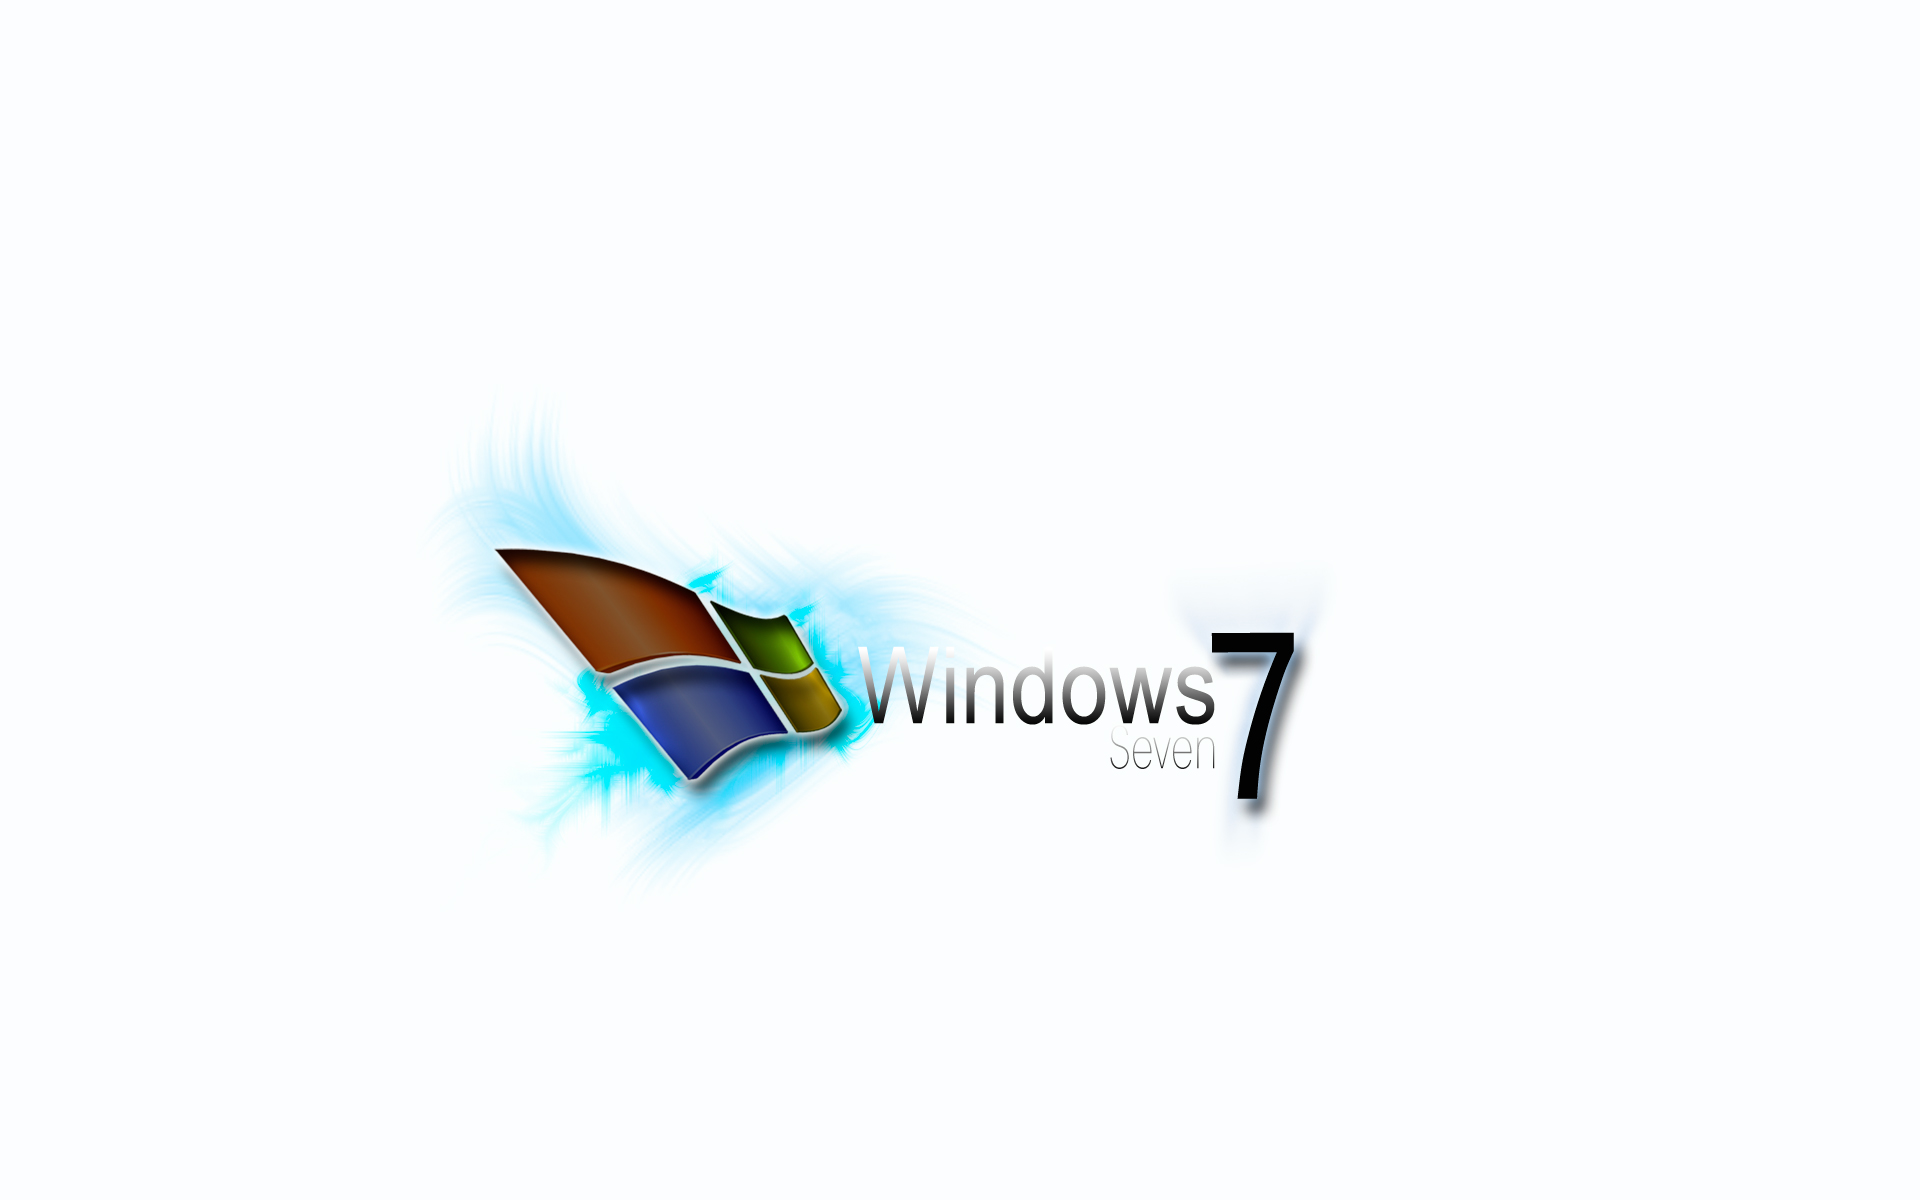 Windows_7_ultimate_06.jpg : 디아블로를 찾아서 Windows 7 바탕화면